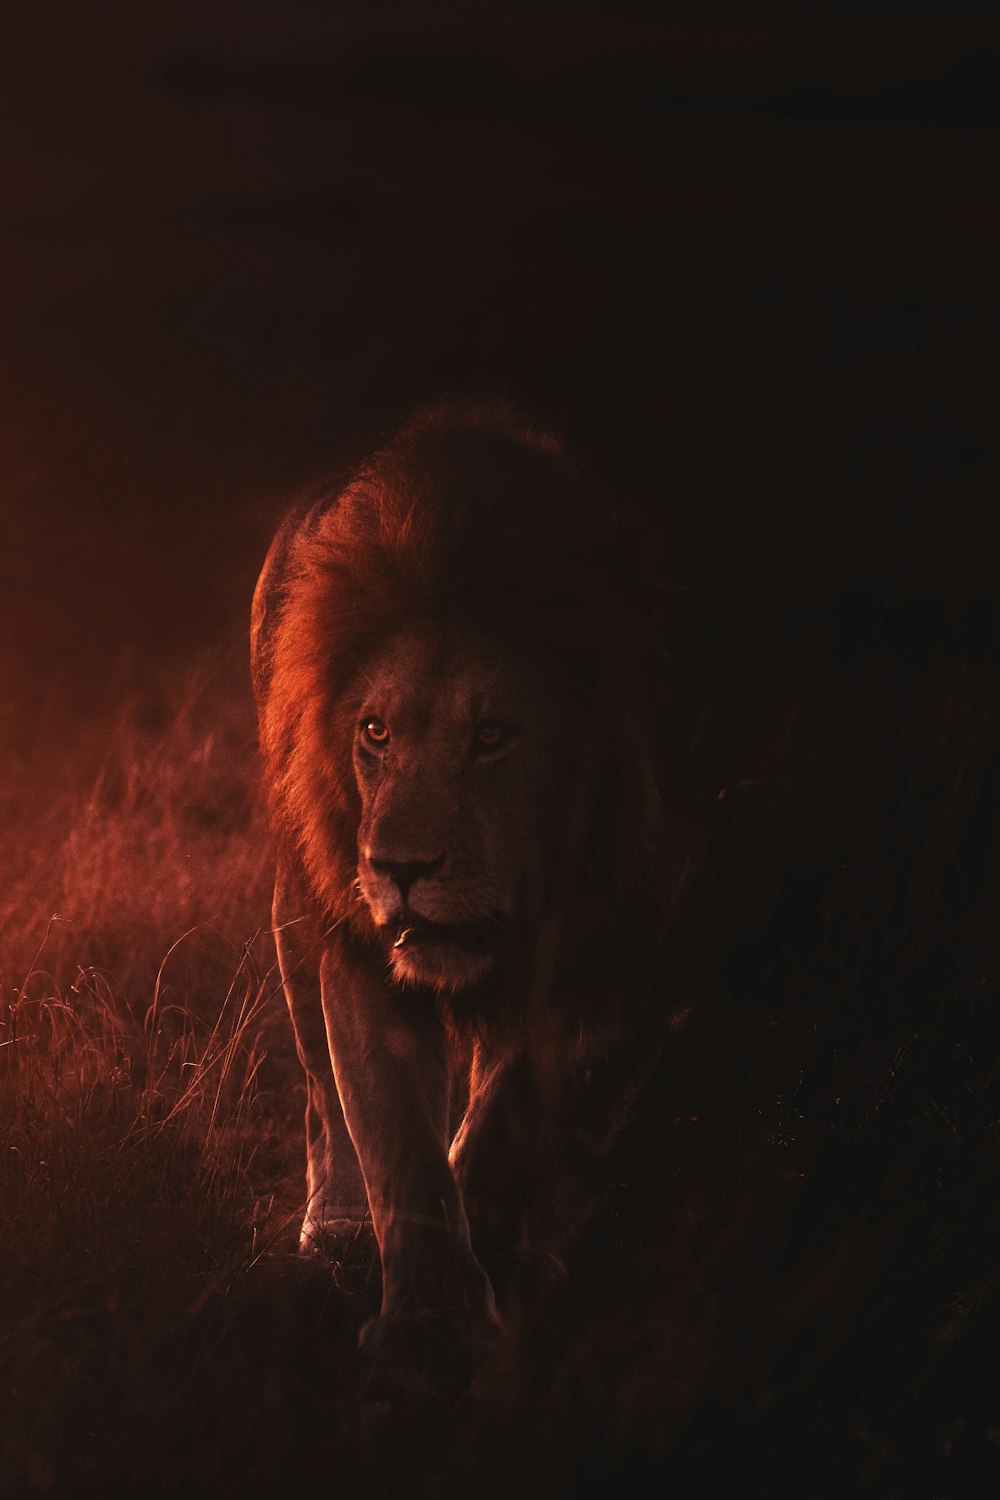 lions, tigers, bears are no longer a sense of fear